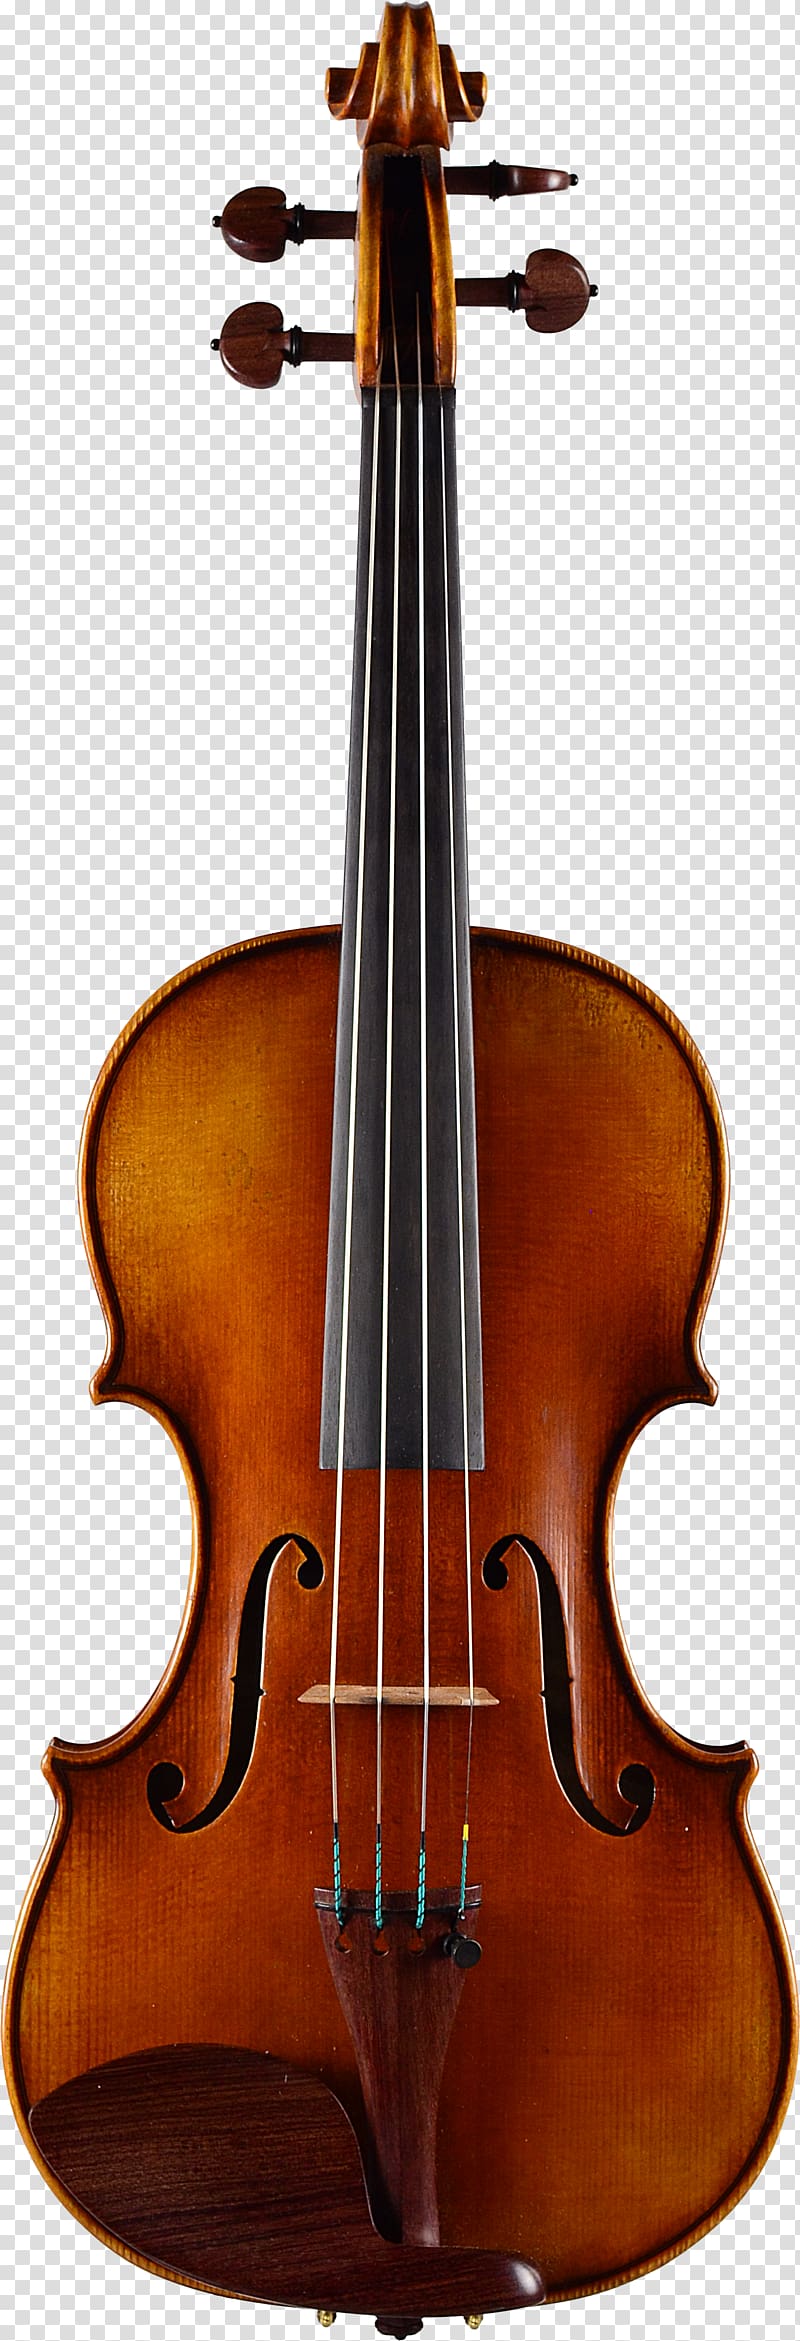 Violin Viola Musical Instruments String Instruments Cello, violin transparent background PNG clipart